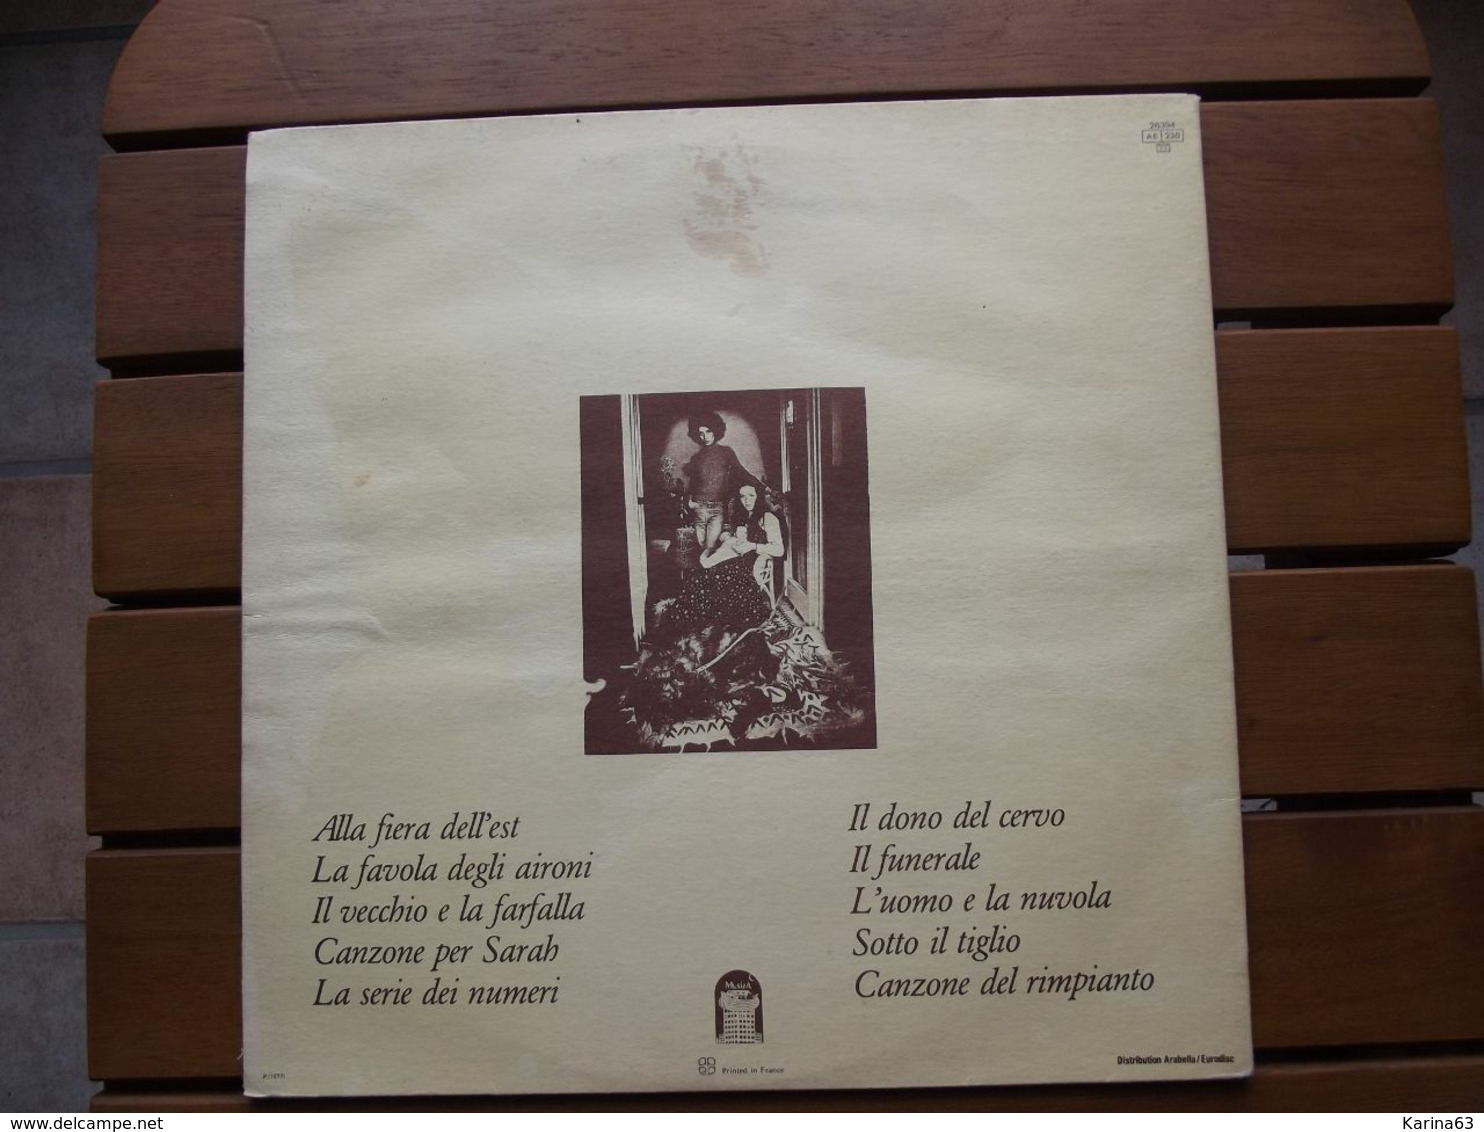 Angelo Branduardi ‎– Alla Fiera Dell' Est - 1979 - Sonstige - Italienische Musik